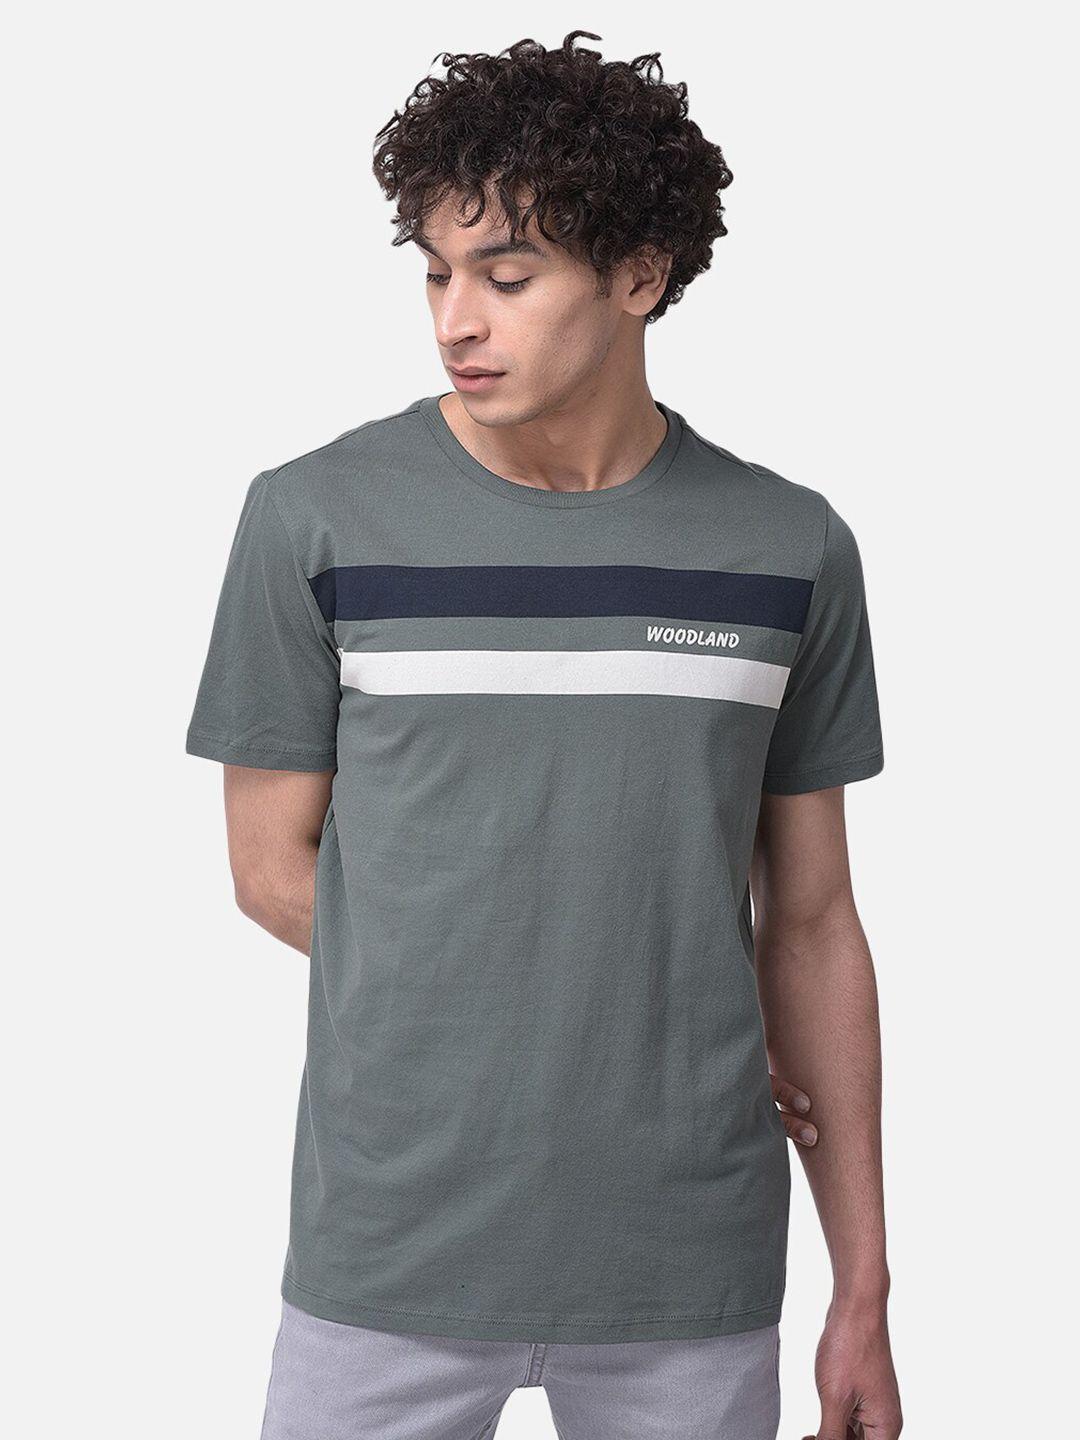 woodland-men-cotton-grey-&-white-striped-printed-t-shirt